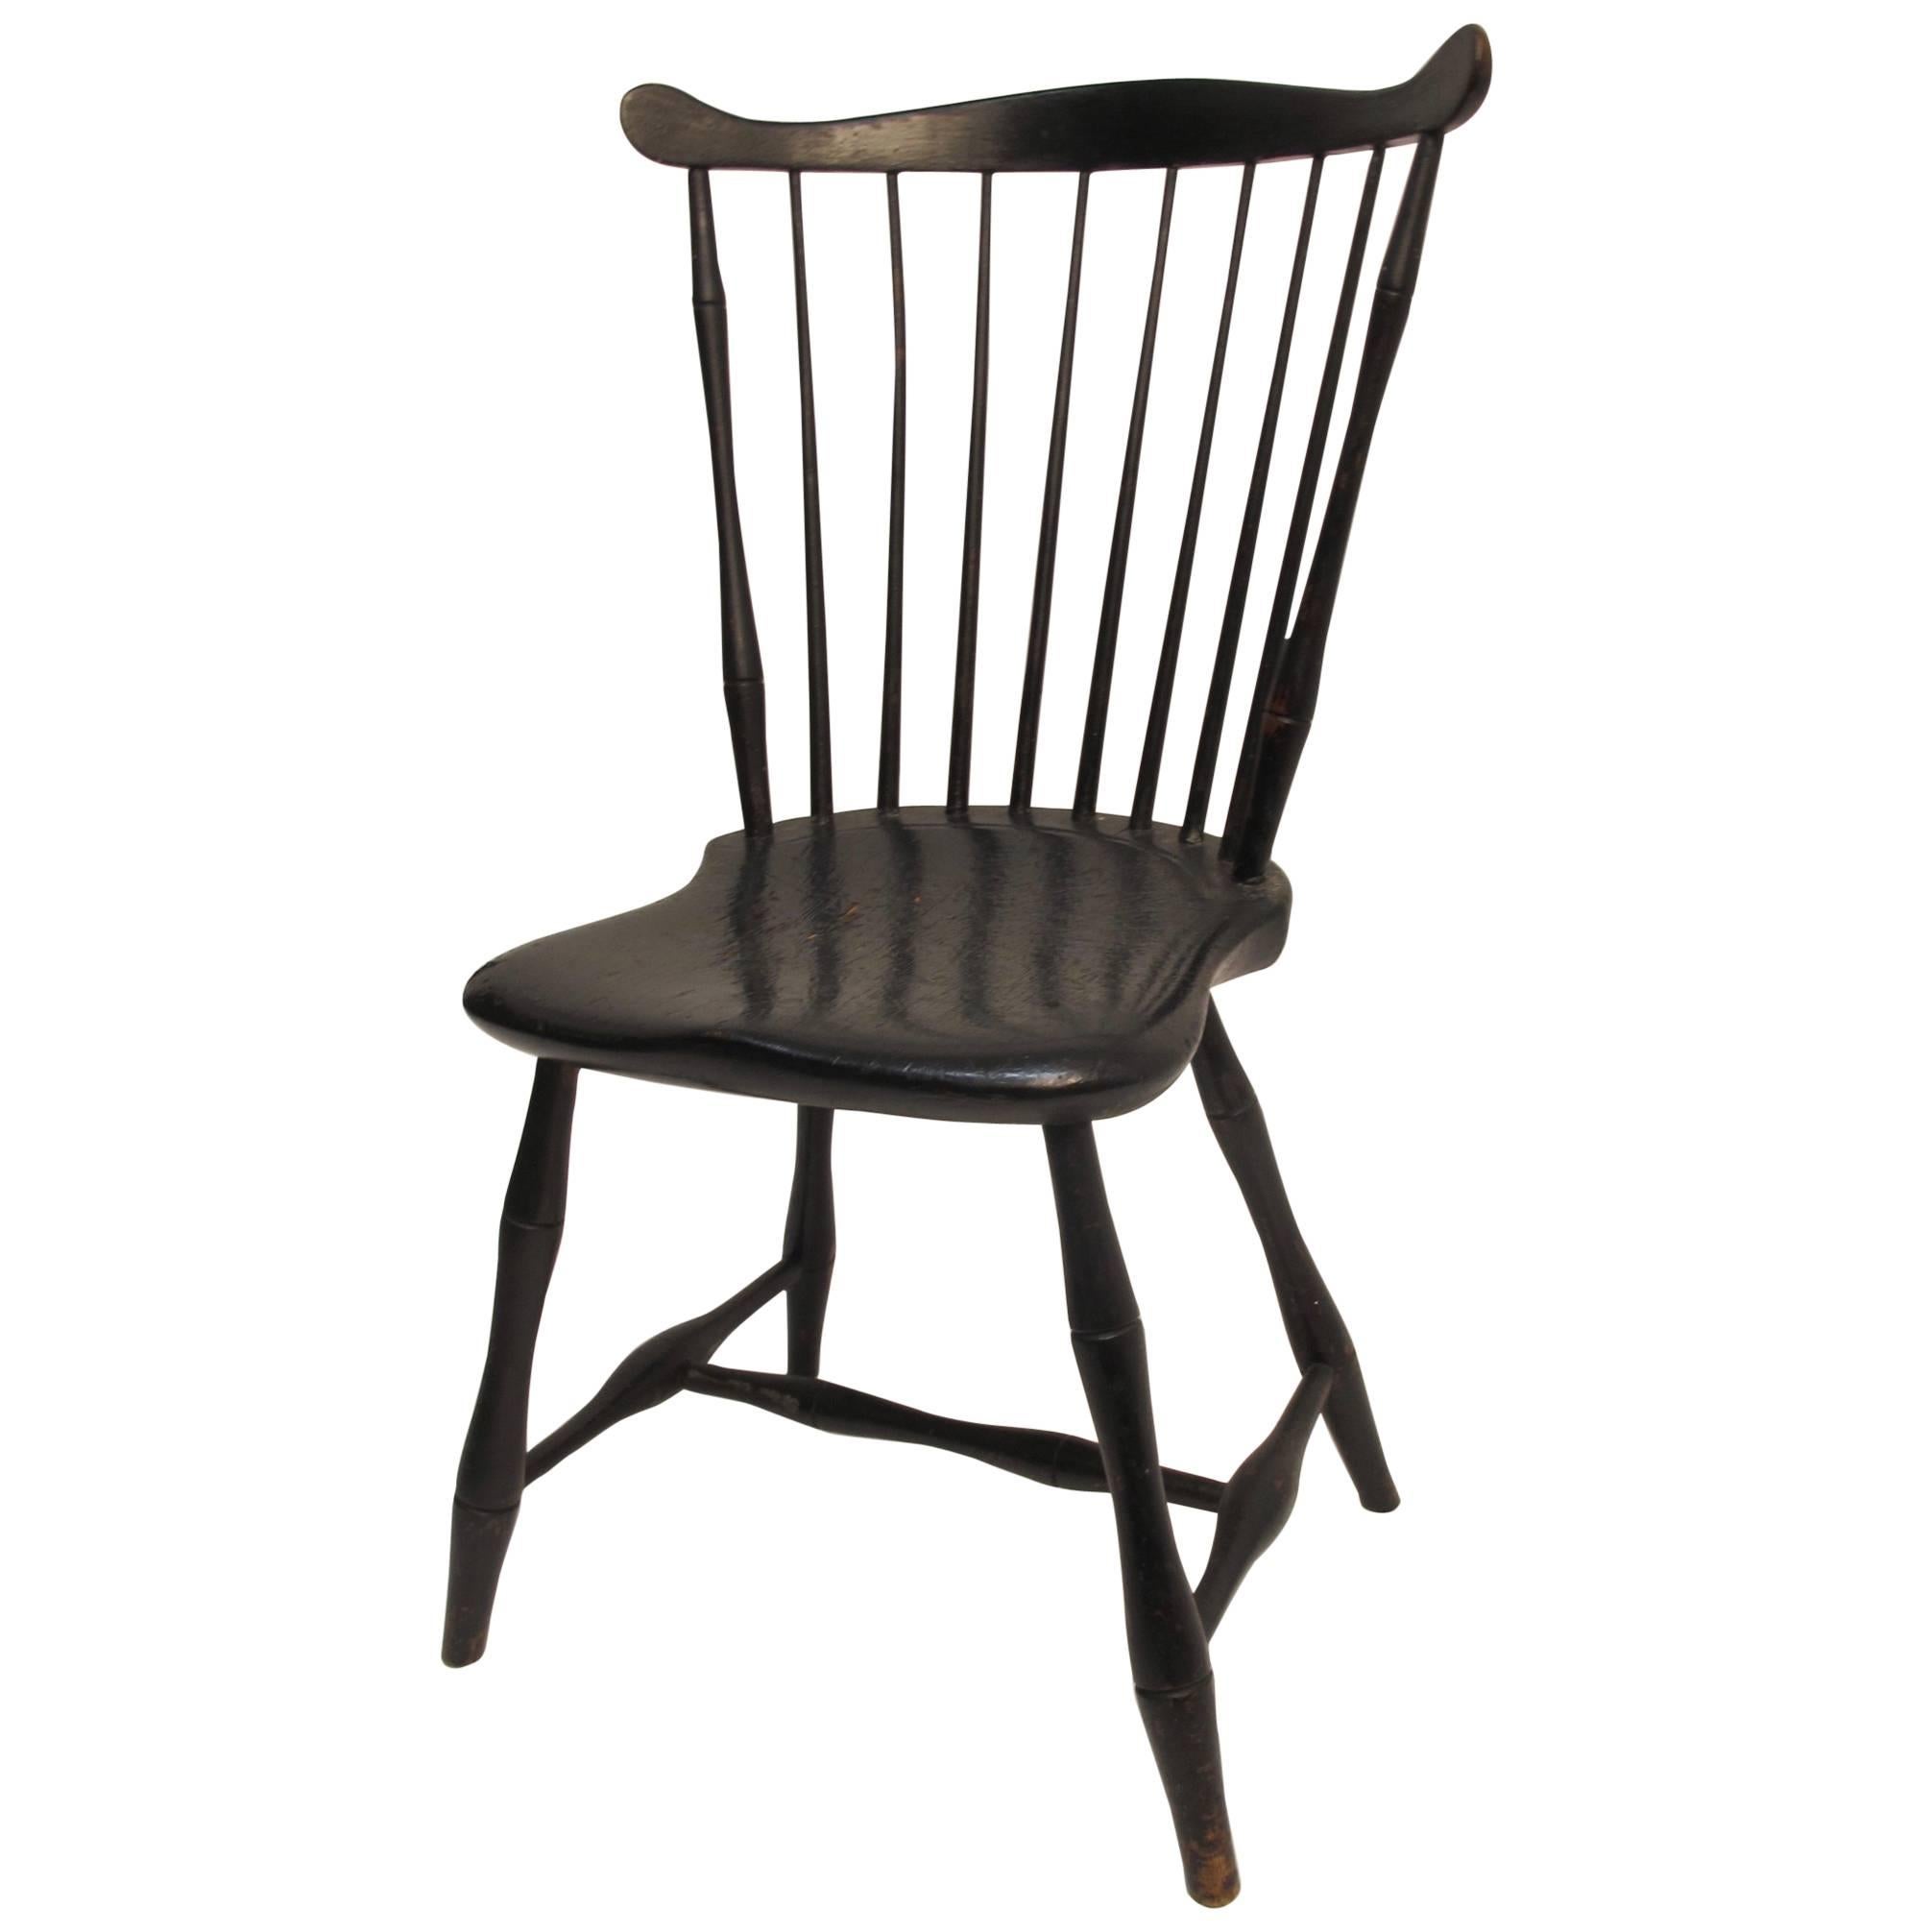 Early American Windsor Side Chair